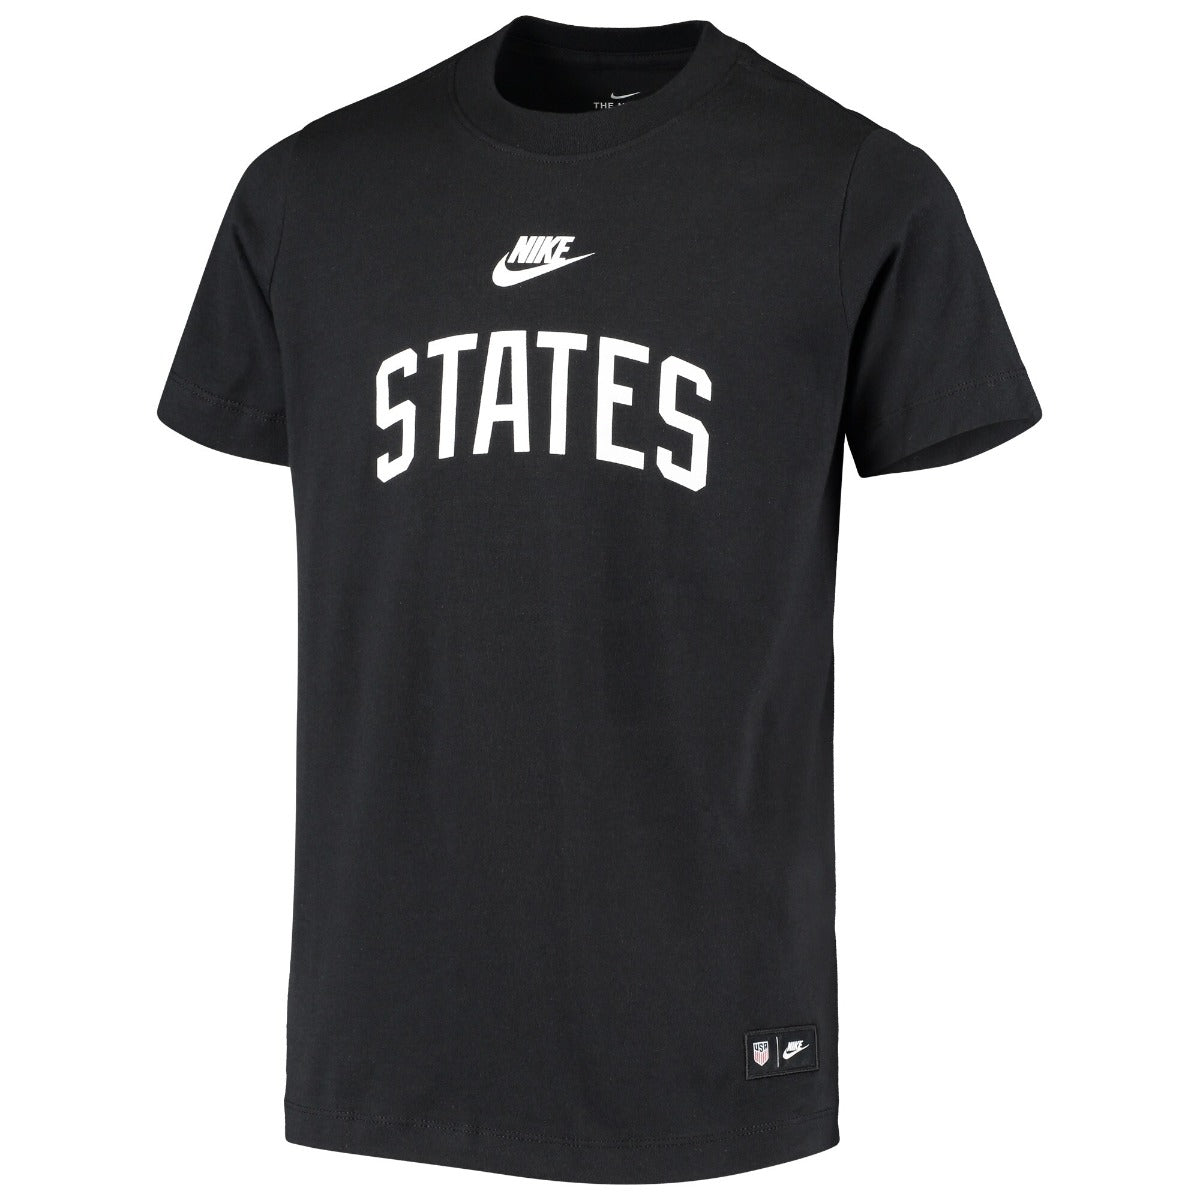 Nike 2020-21 USA YOUTH States Tee - Black